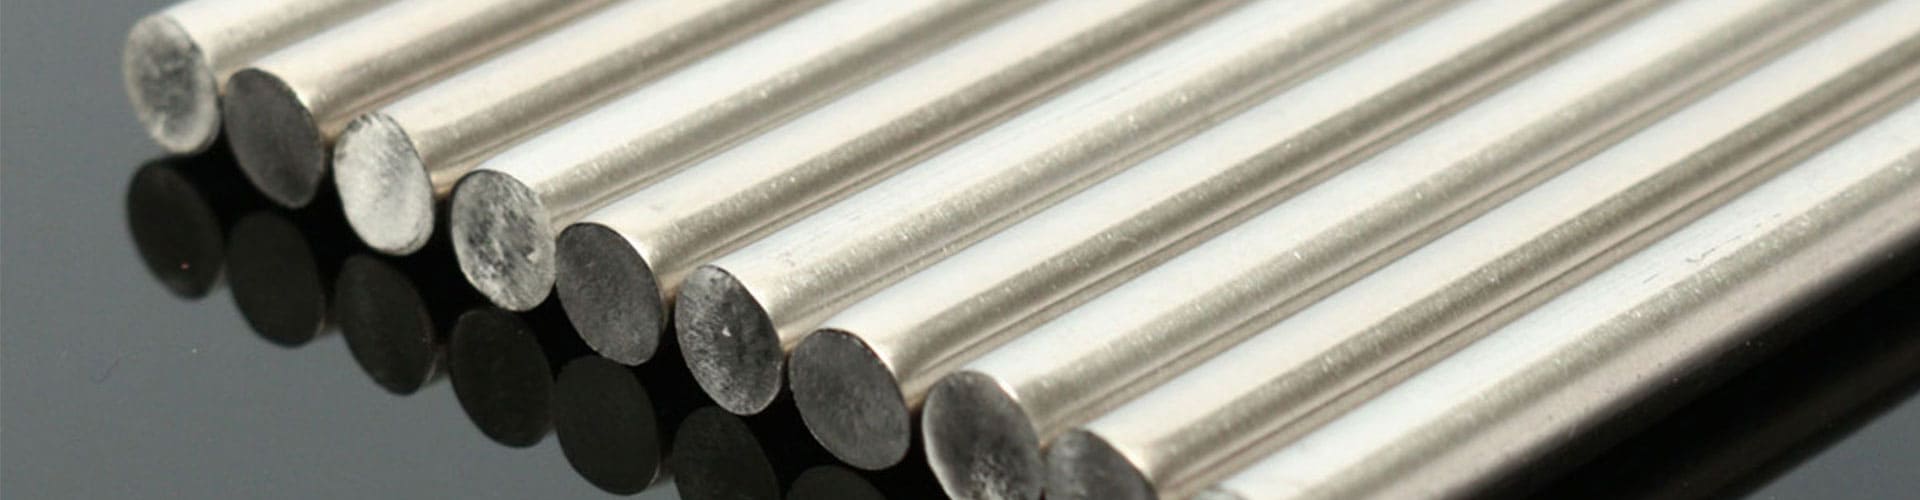 nickel-alloy-201-round-bars-rods-manufacturer-exporter-supplier-in-ghana